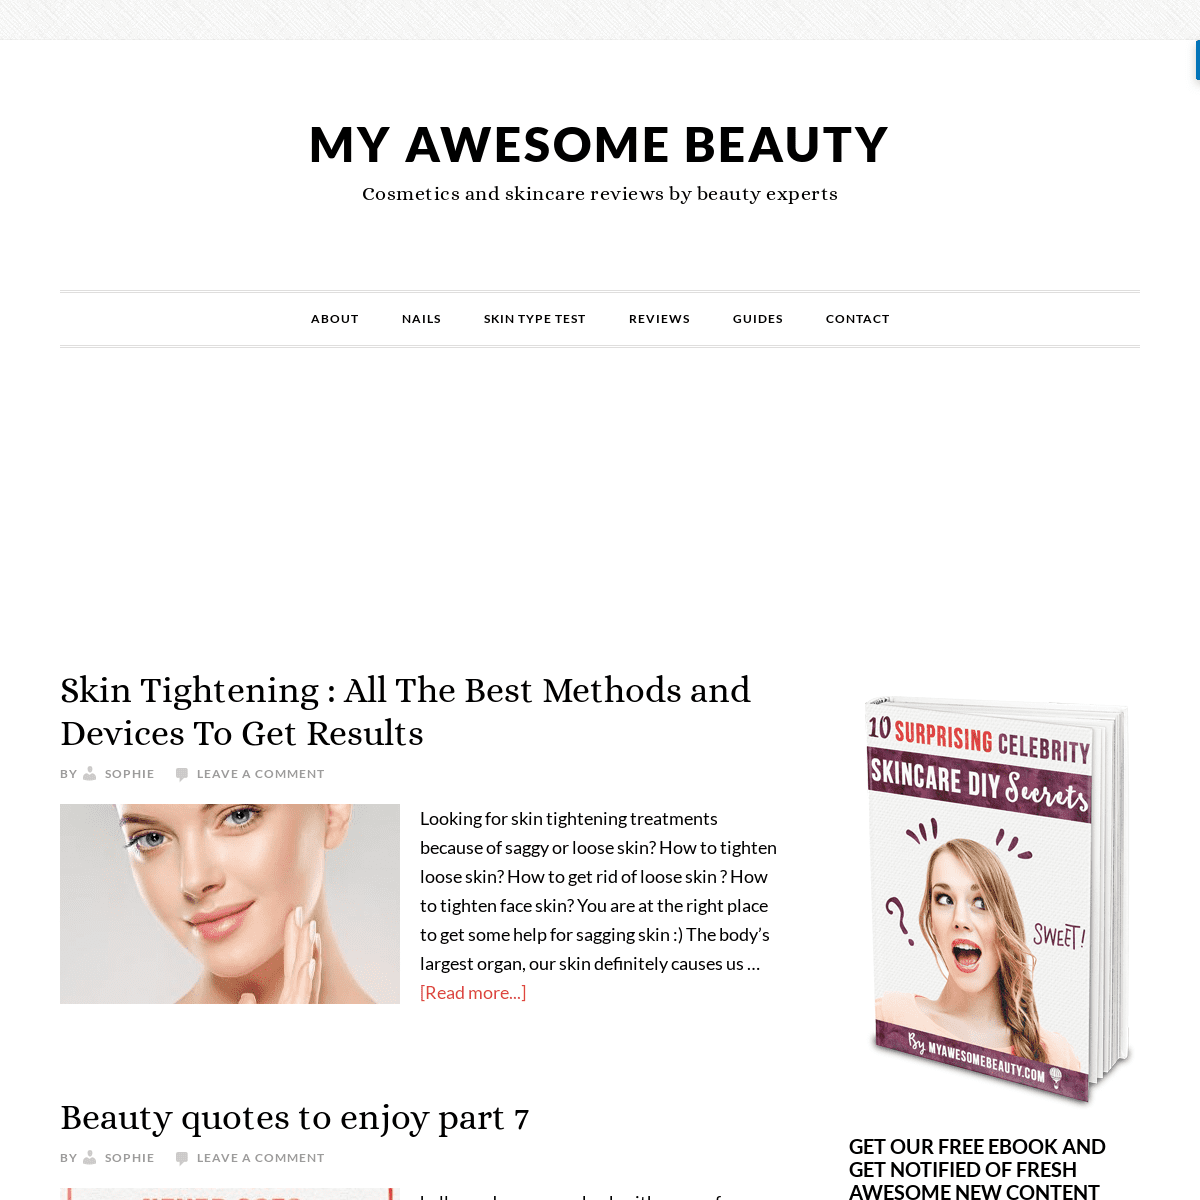 A complete backup of myawesomebeauty.com